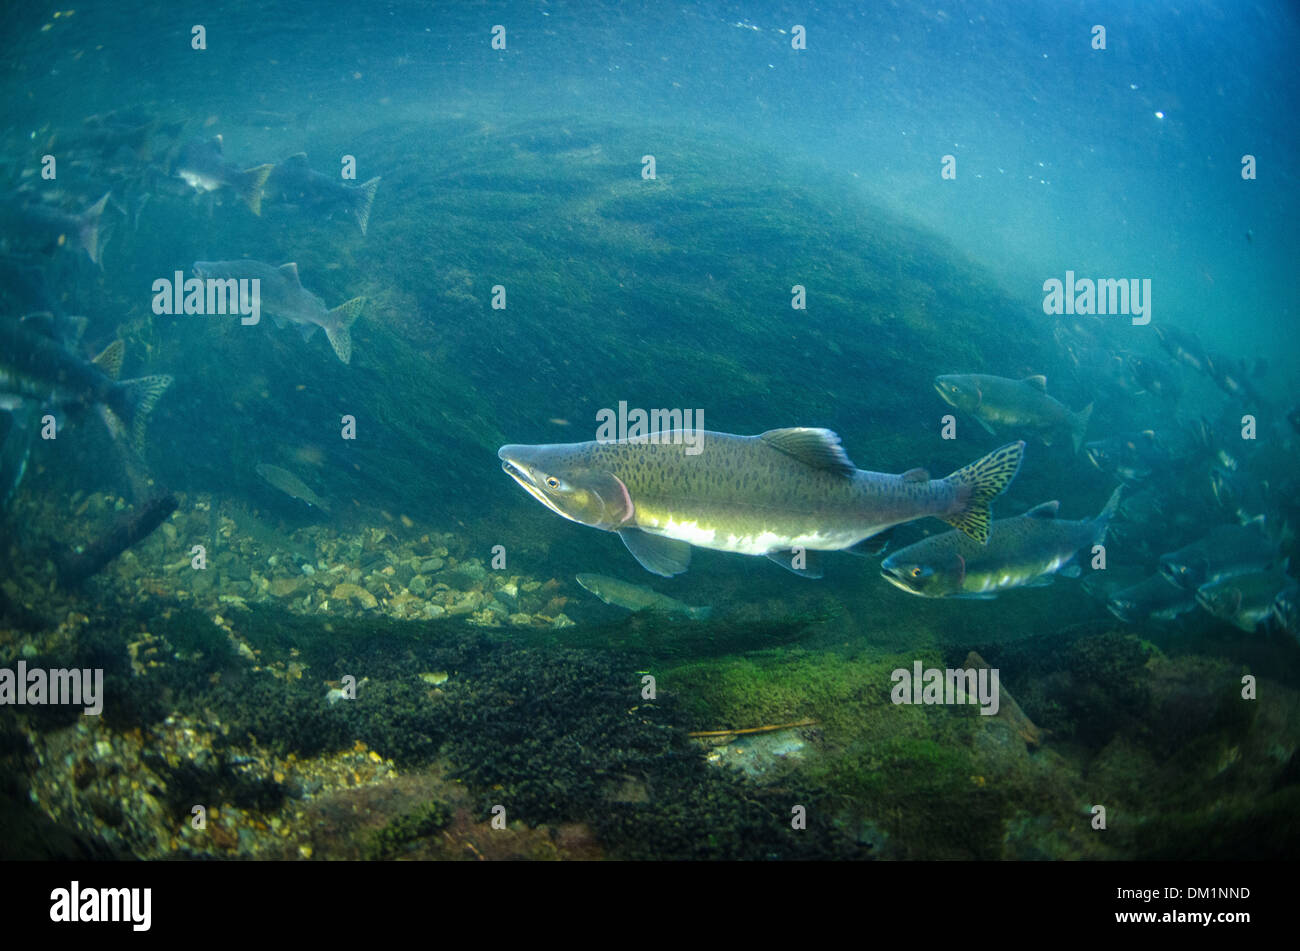 pink or humpback salmon Oncorhynchus gorbuscha swimming upstream in alaska taken underwater Stock Photo